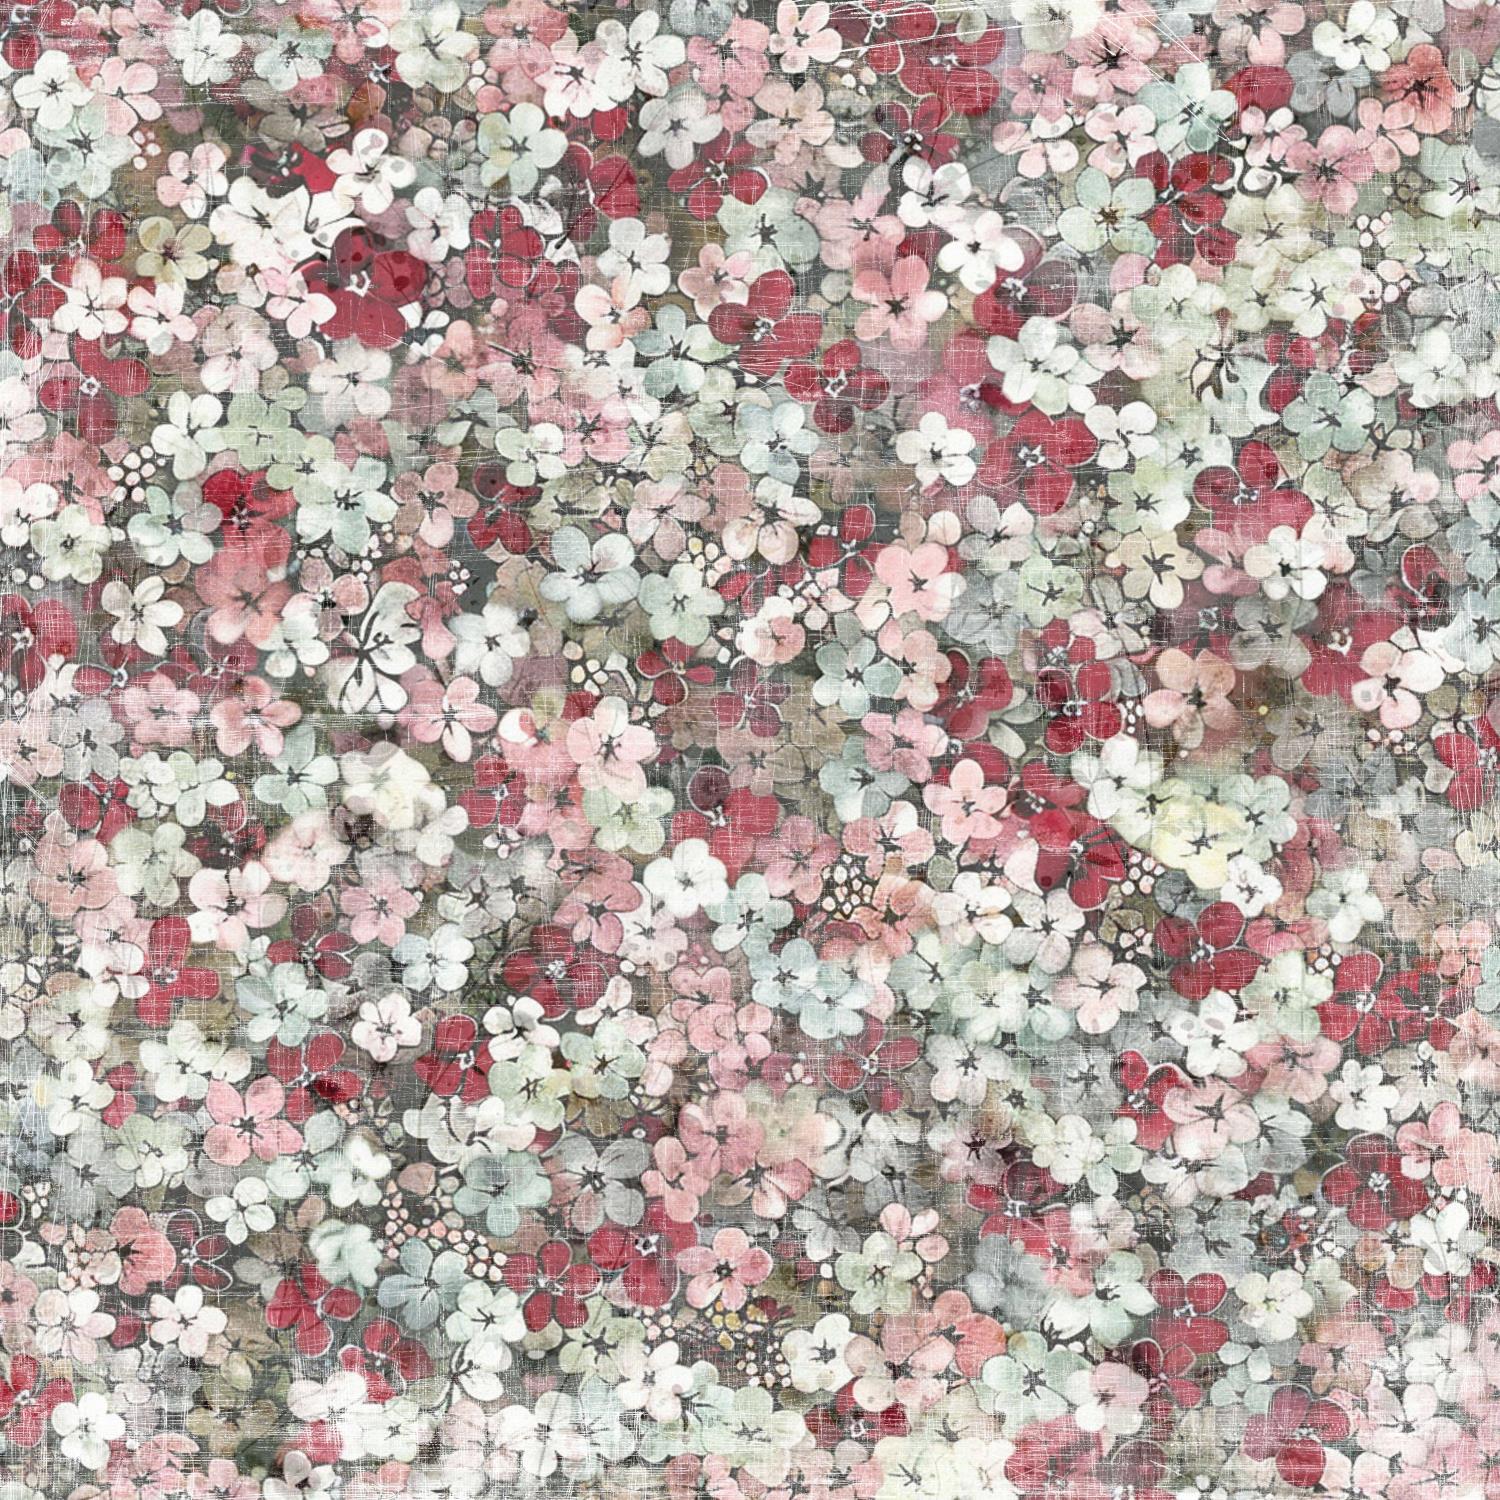 Reprint - 12 x12 - Kitchen - Small flowers